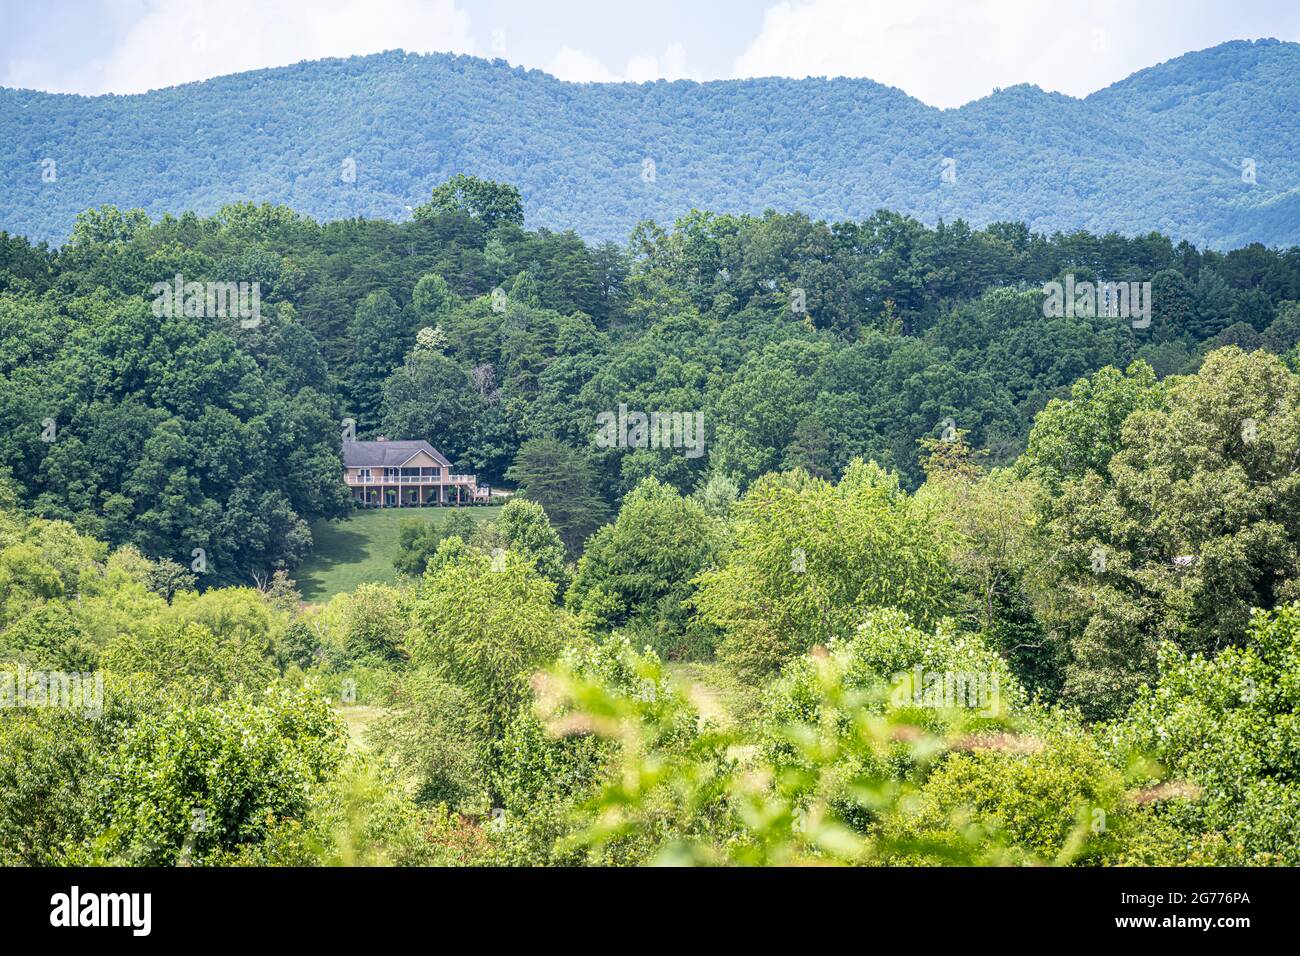 Casa di montagna annidata nelle Blue Ridge Mountains a Blairsville, Georgia. (STATI UNITI) Foto Stock